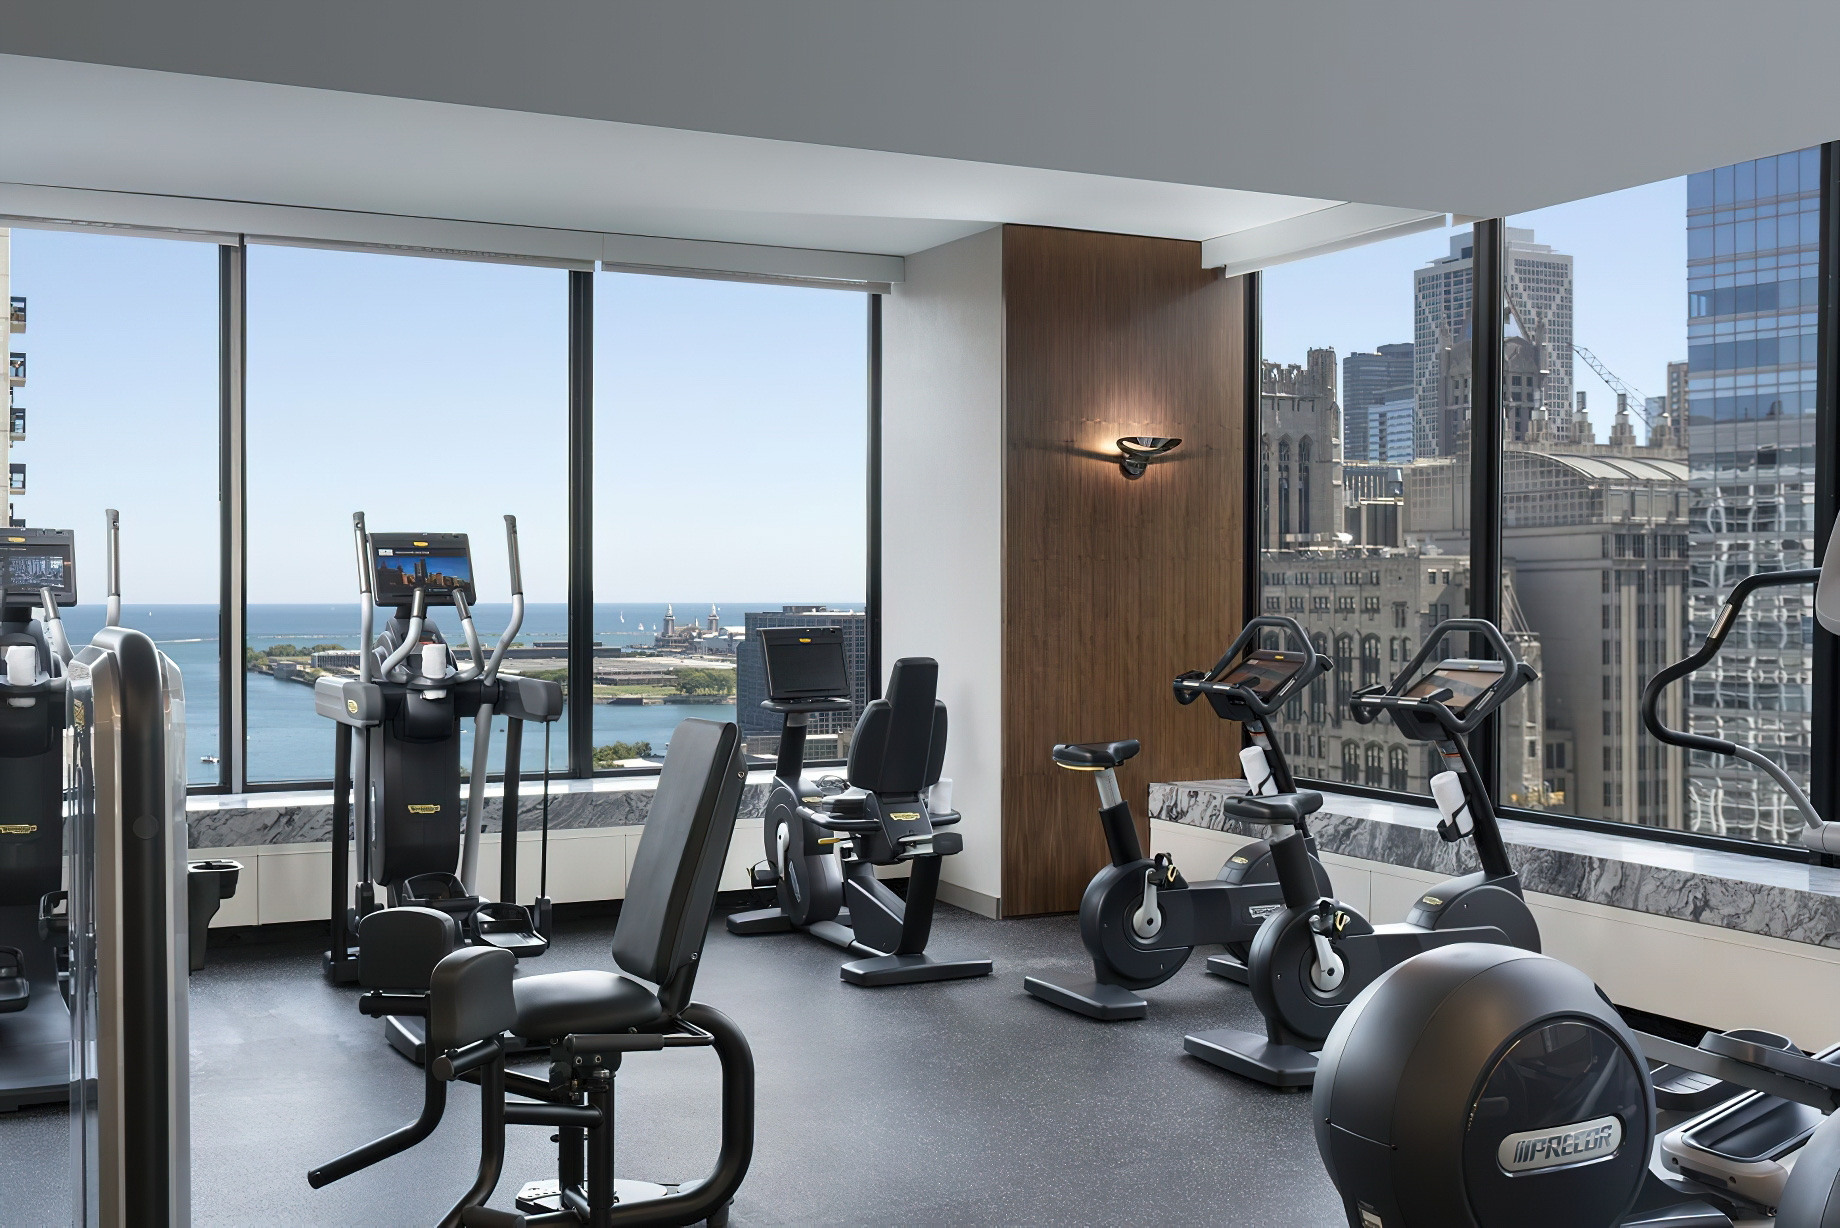 The Ritz-Carlton, Chicago Hotel - Chicago, IL, USA - Fitness Center View